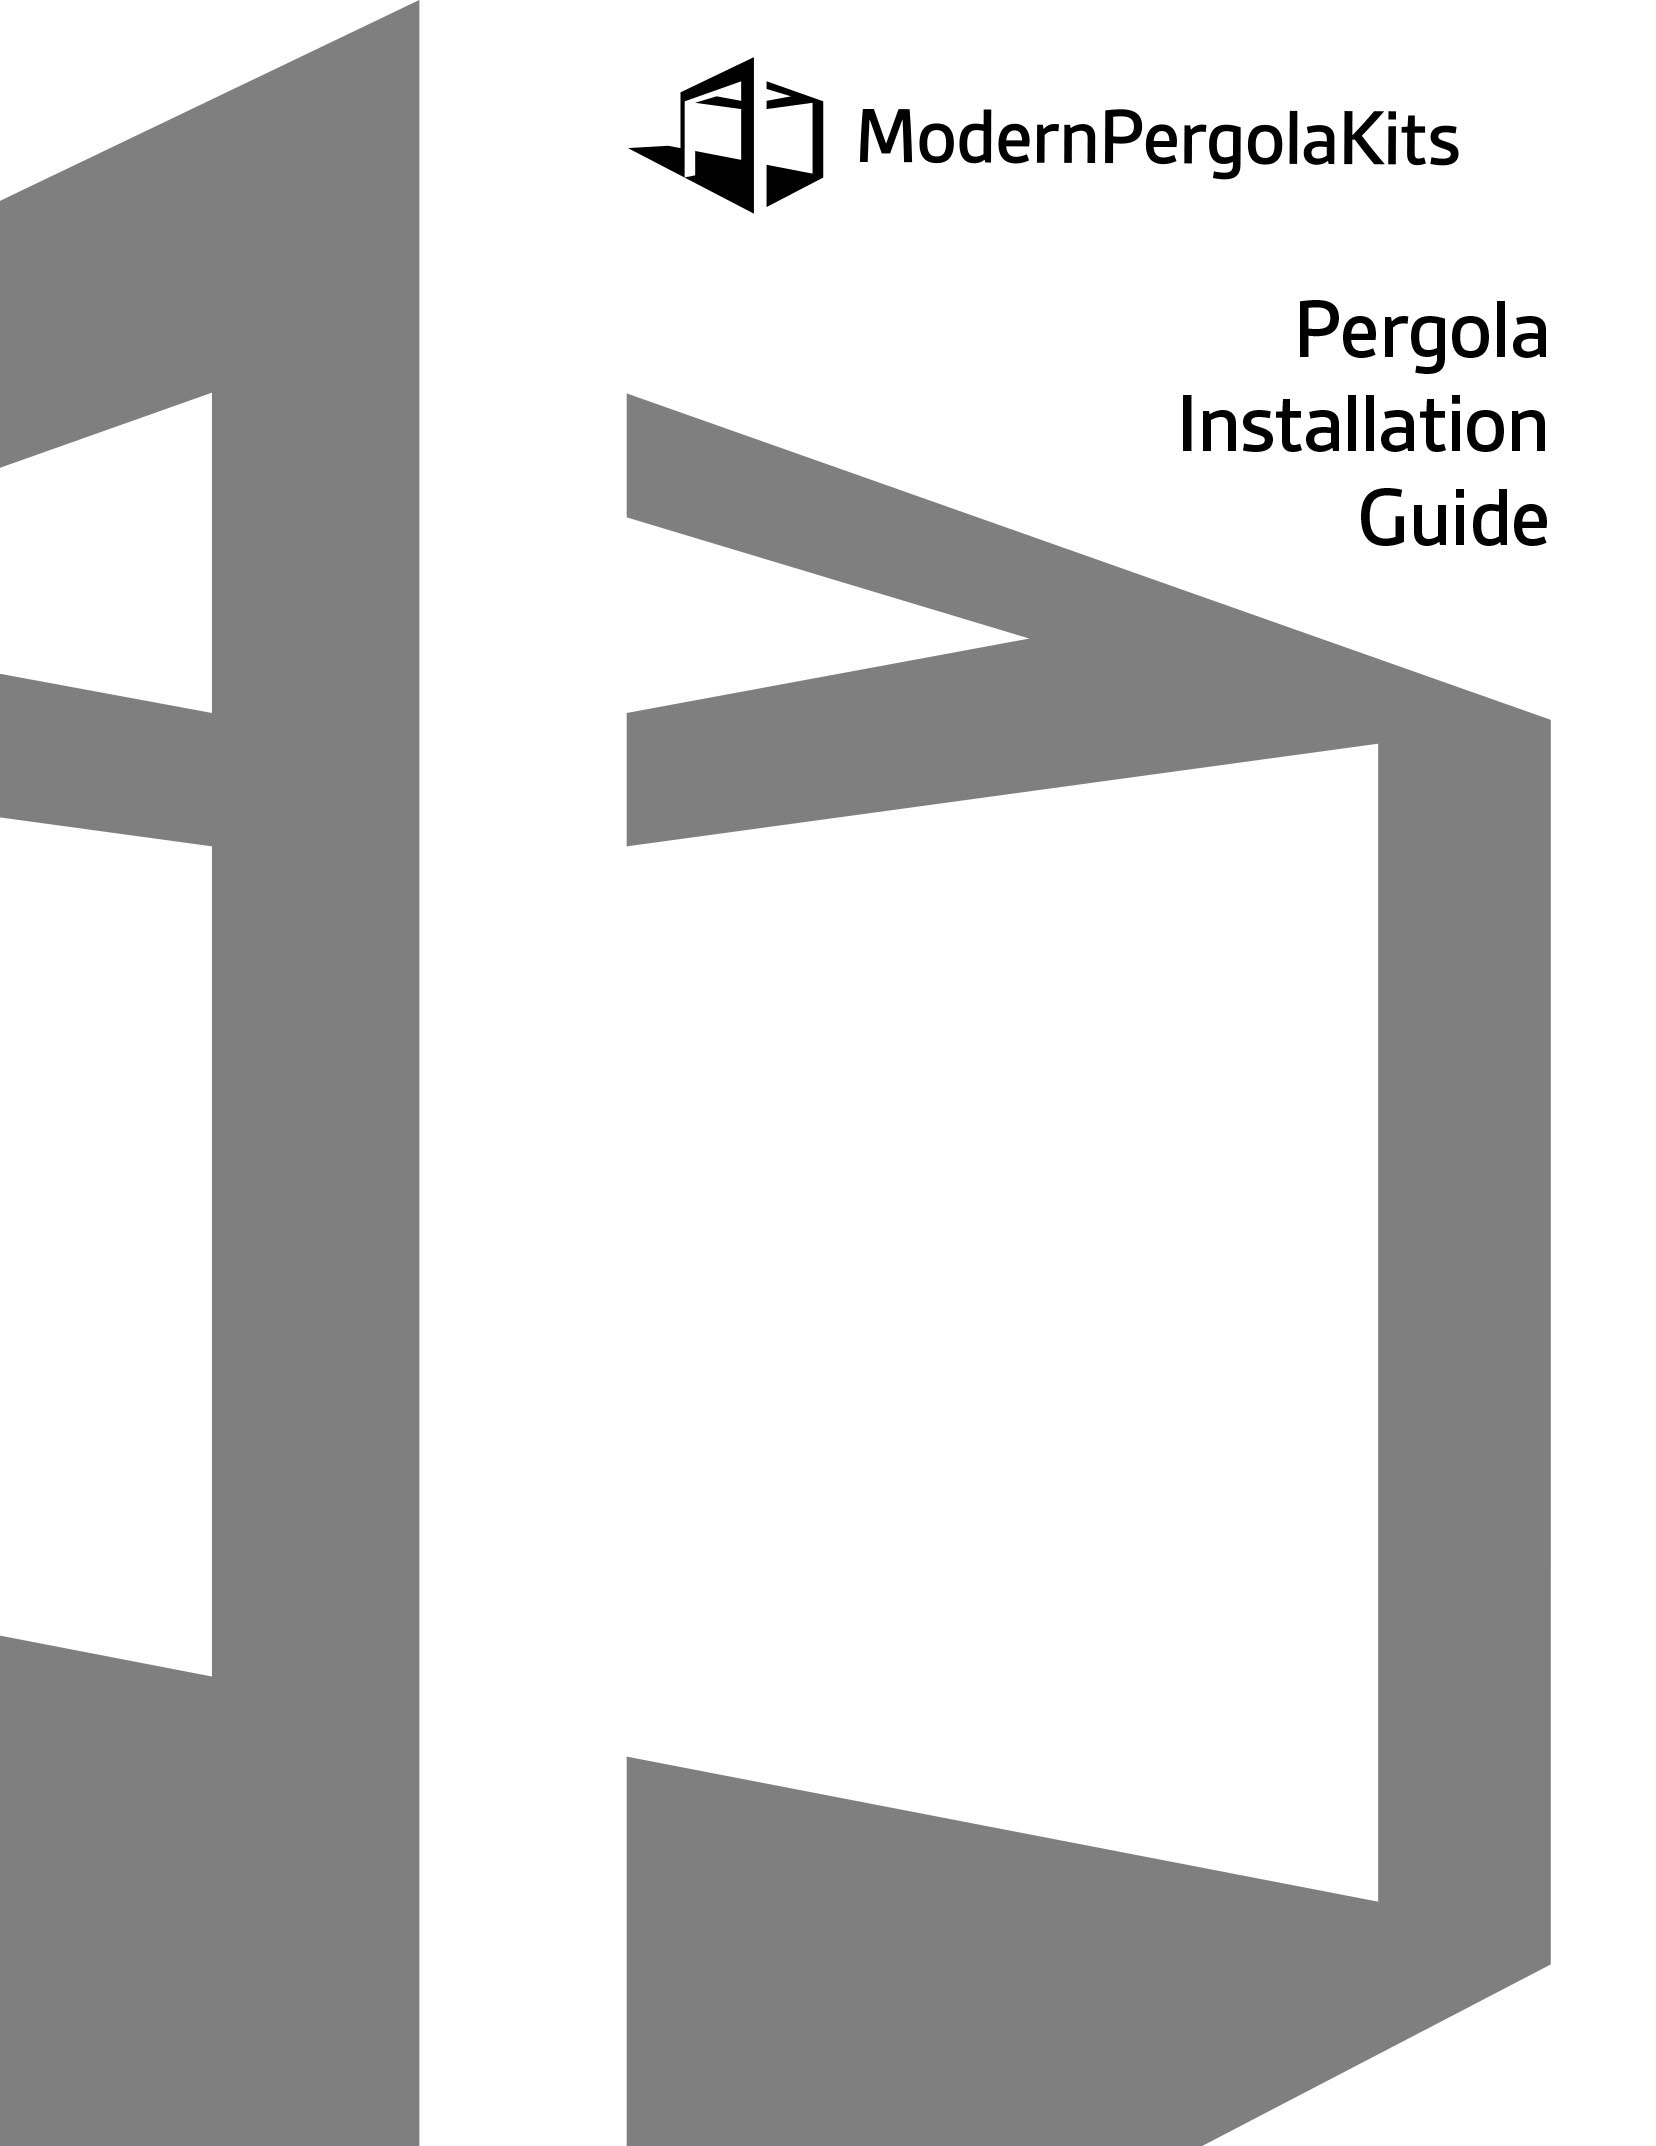 pdf icon for modern pergola kit instructions